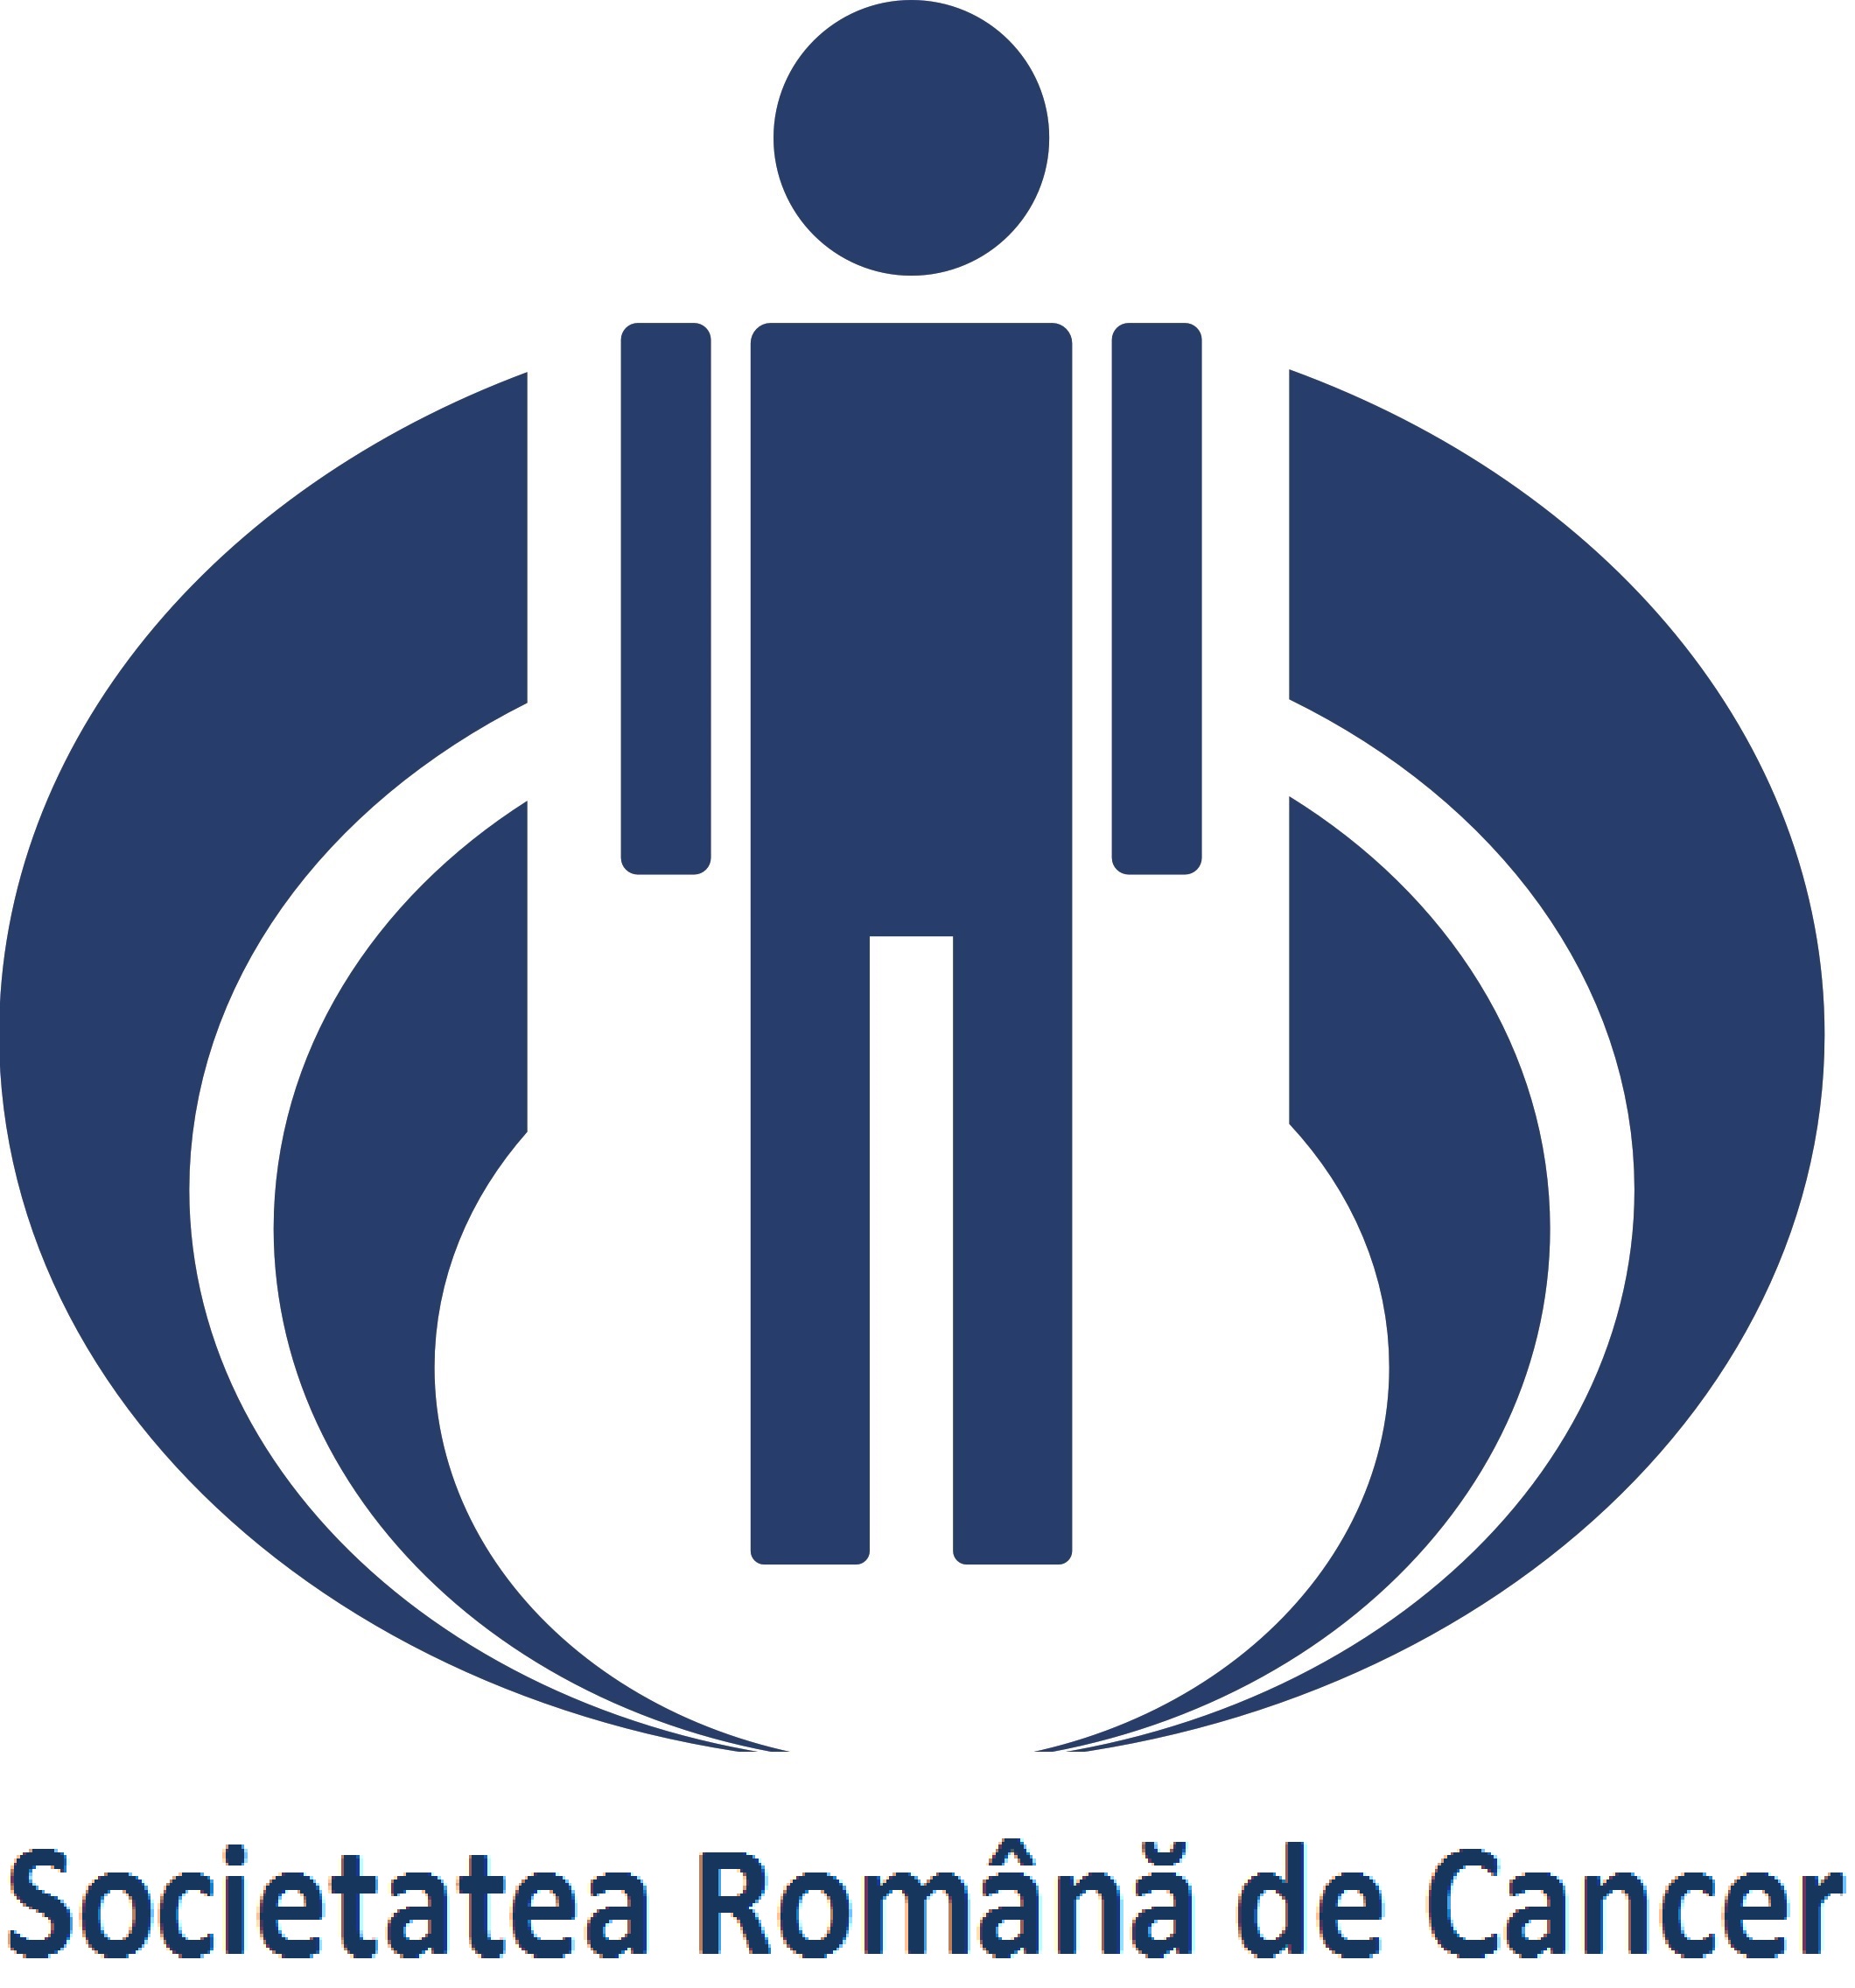 .Societatea Romana de Cancer logo